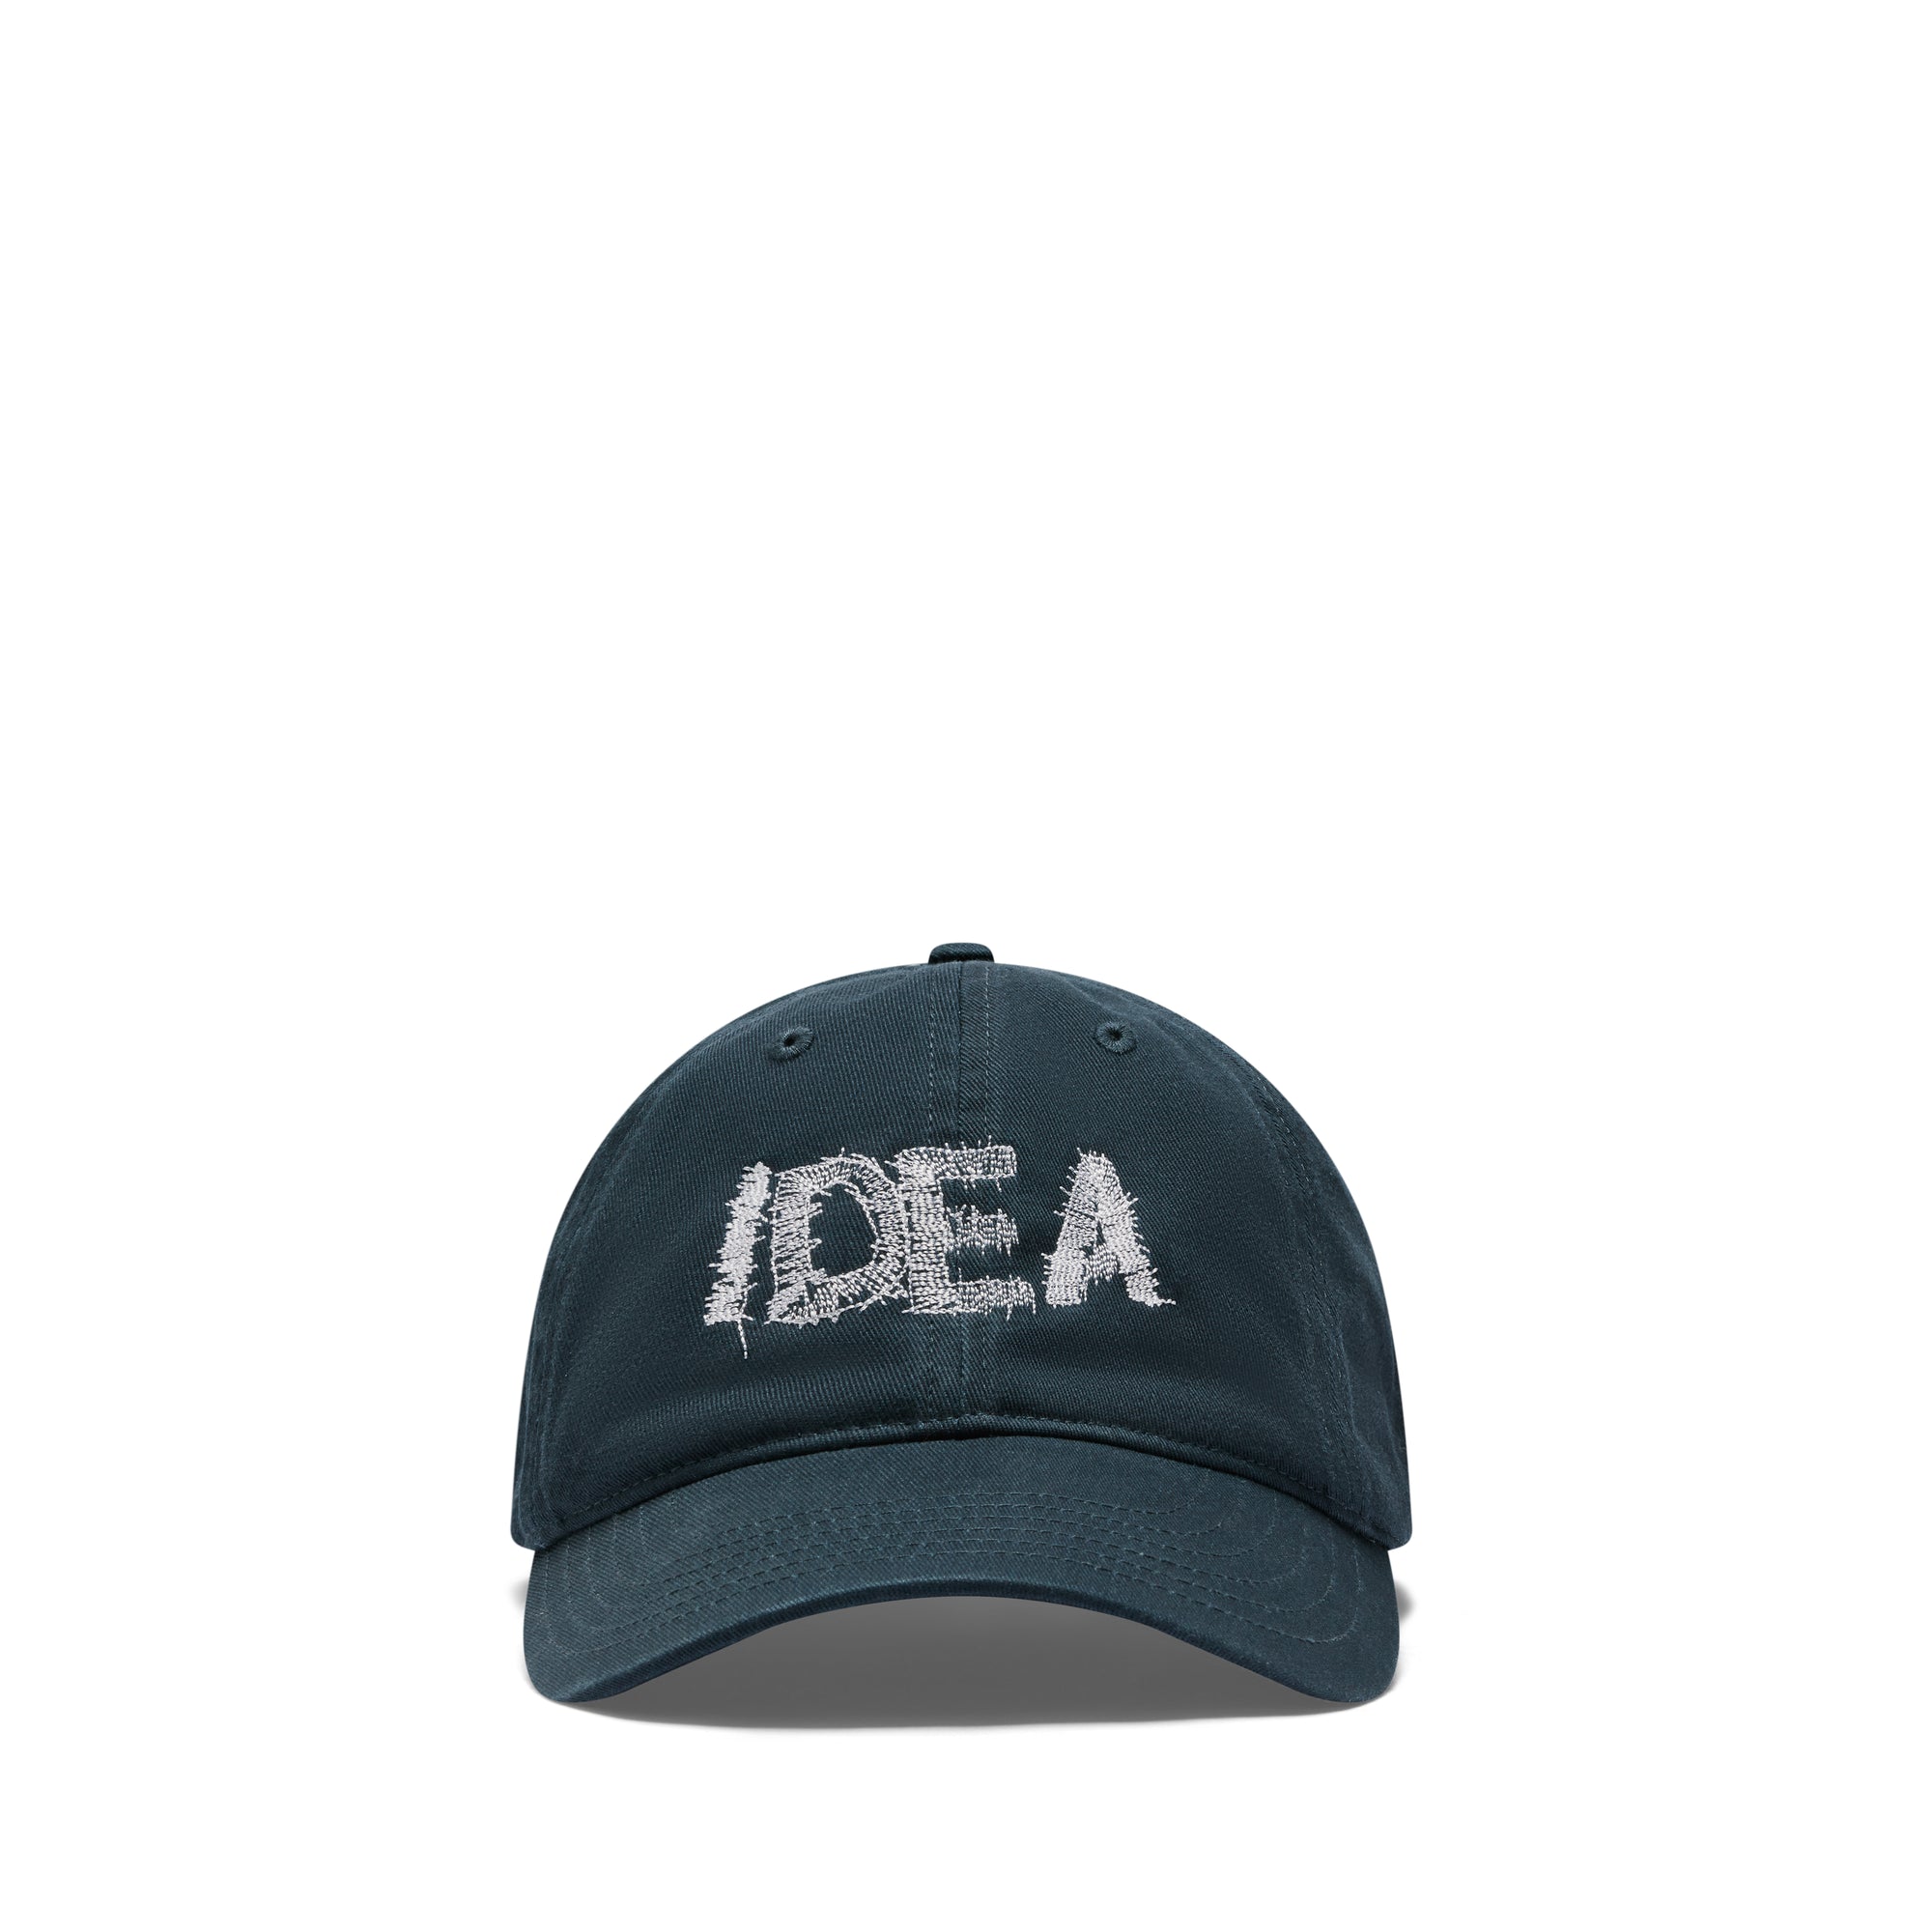 Idea Books - Idea Homemade Hat - (Navy) view 1